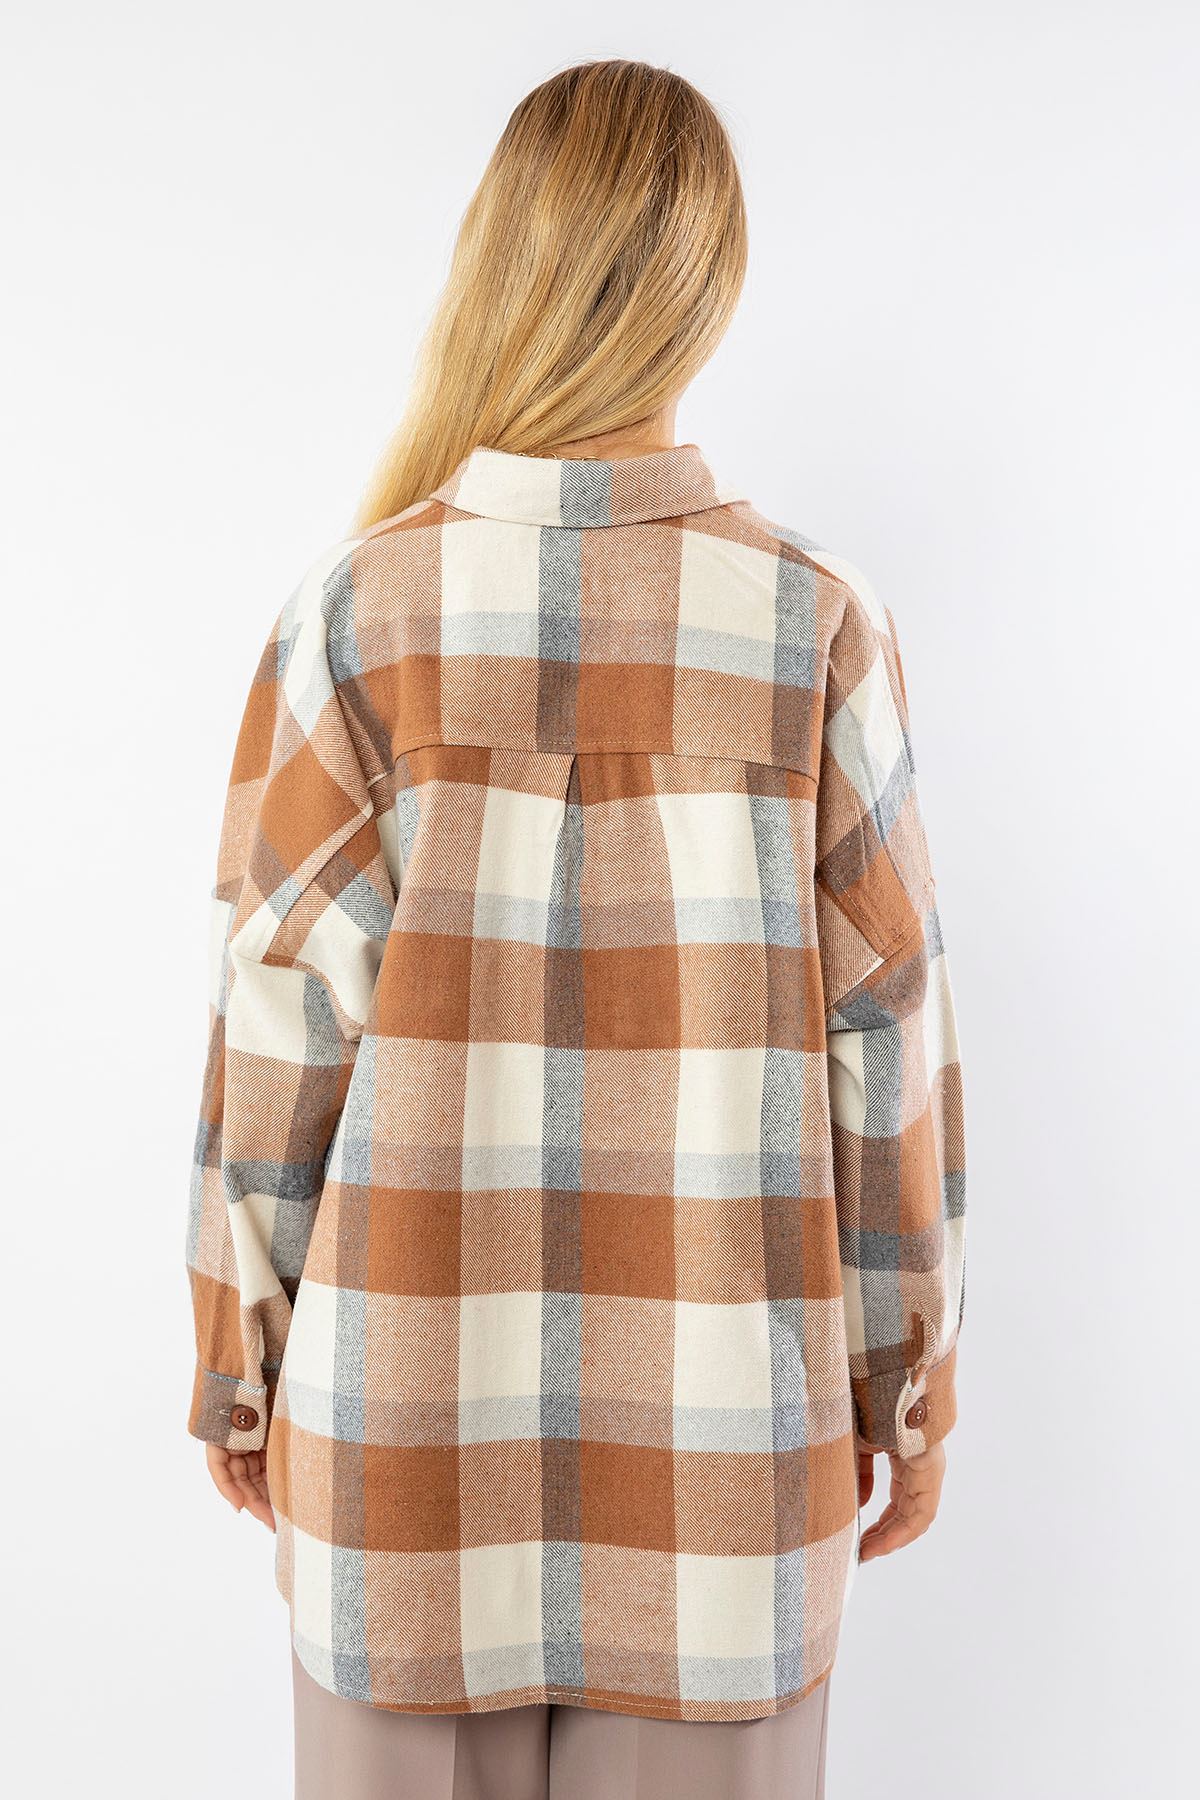 Lumberjack Fabric Long Sleeve Below Hip Oversize Plaid Women'S Shirt - Brick 